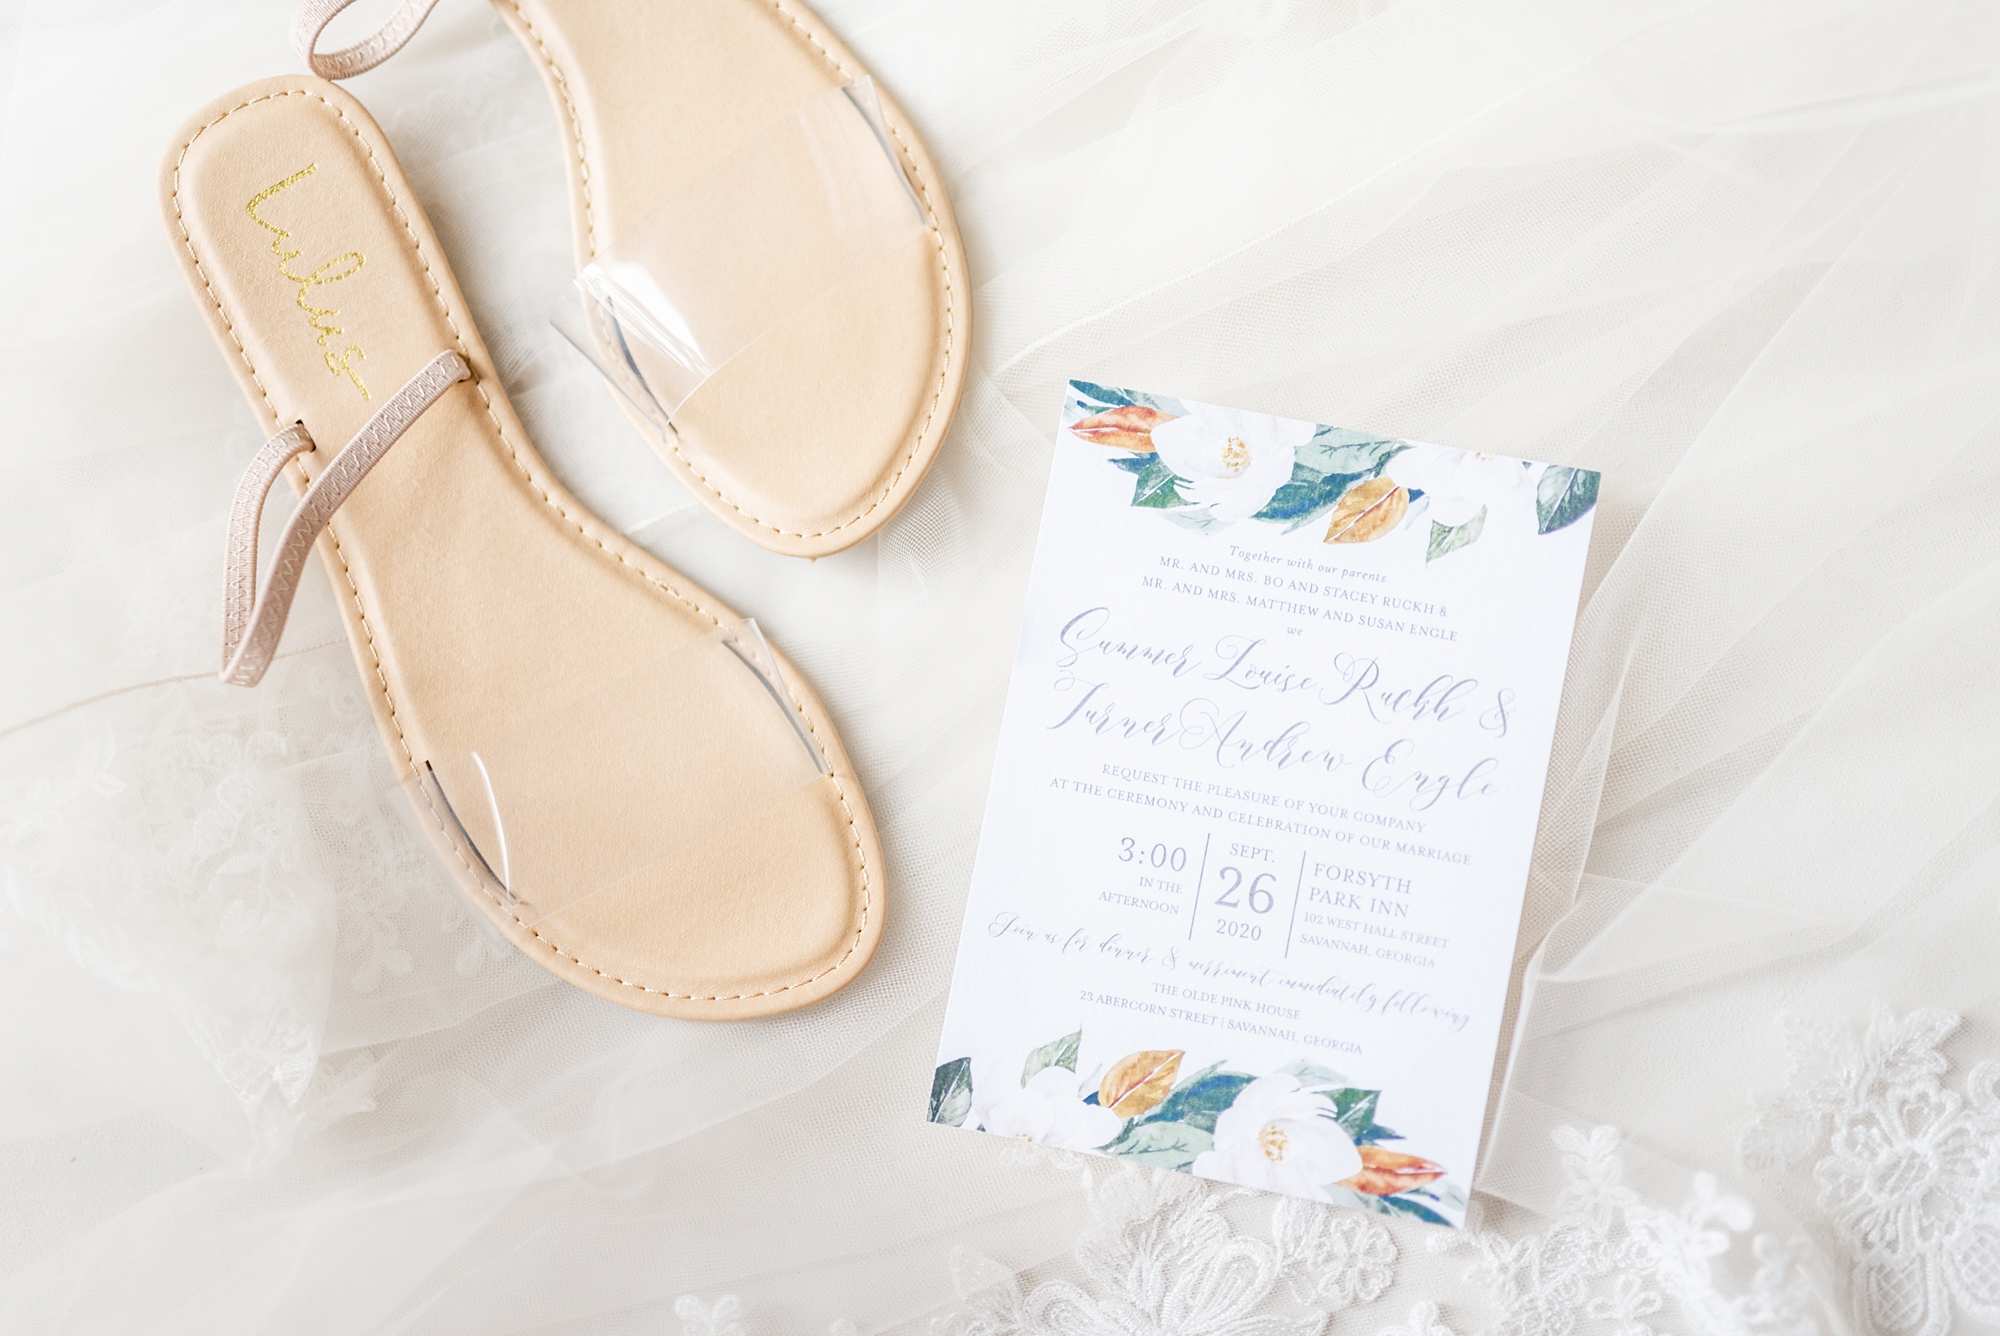 bride's sandals and wedding invitation for Forsyth Park Inn wedding